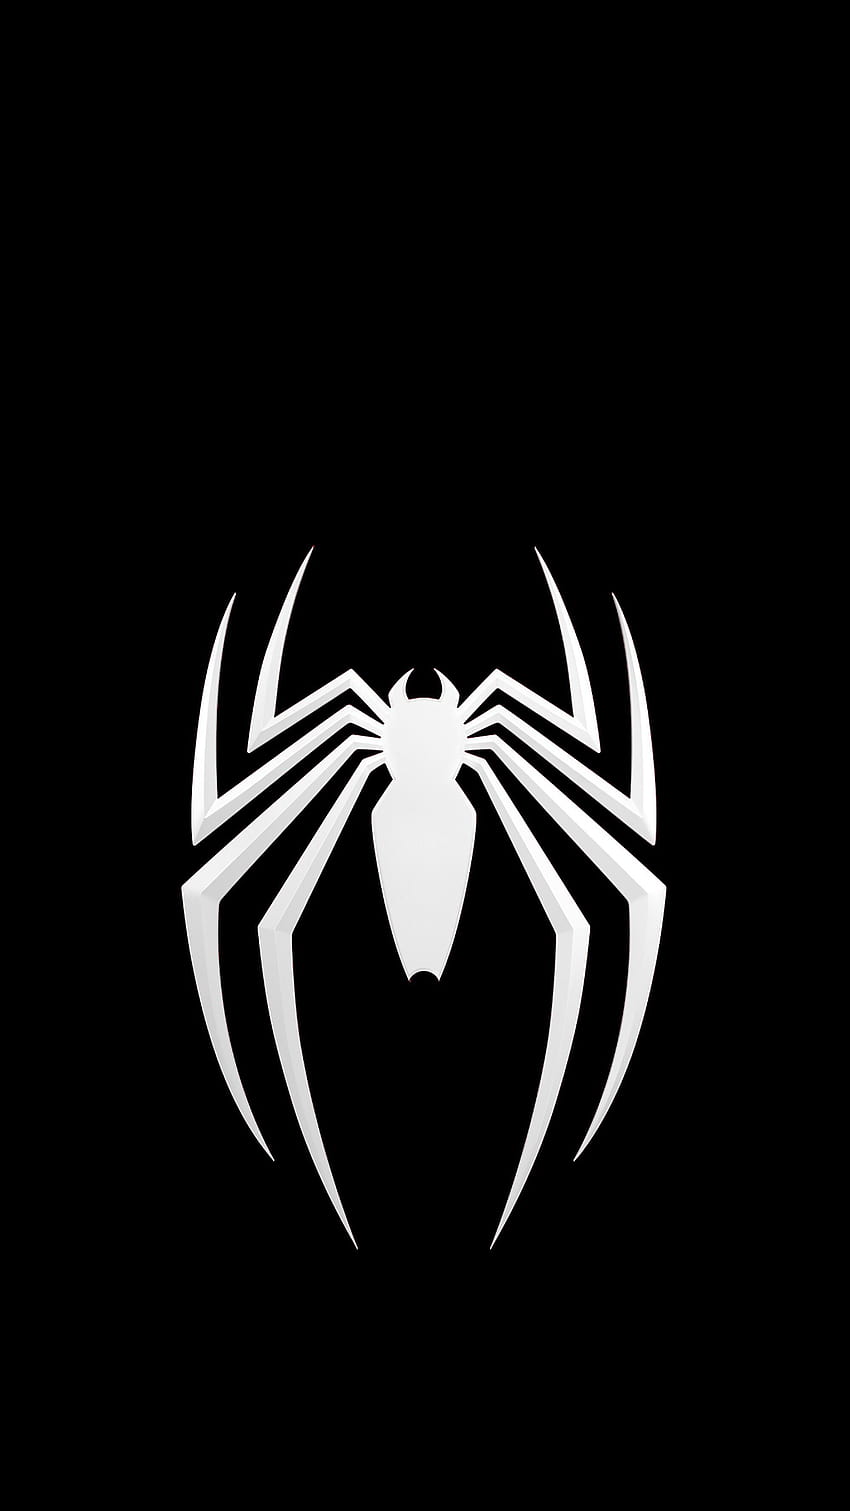 Simbol Spider Man PS4 wallpaper ponsel HD